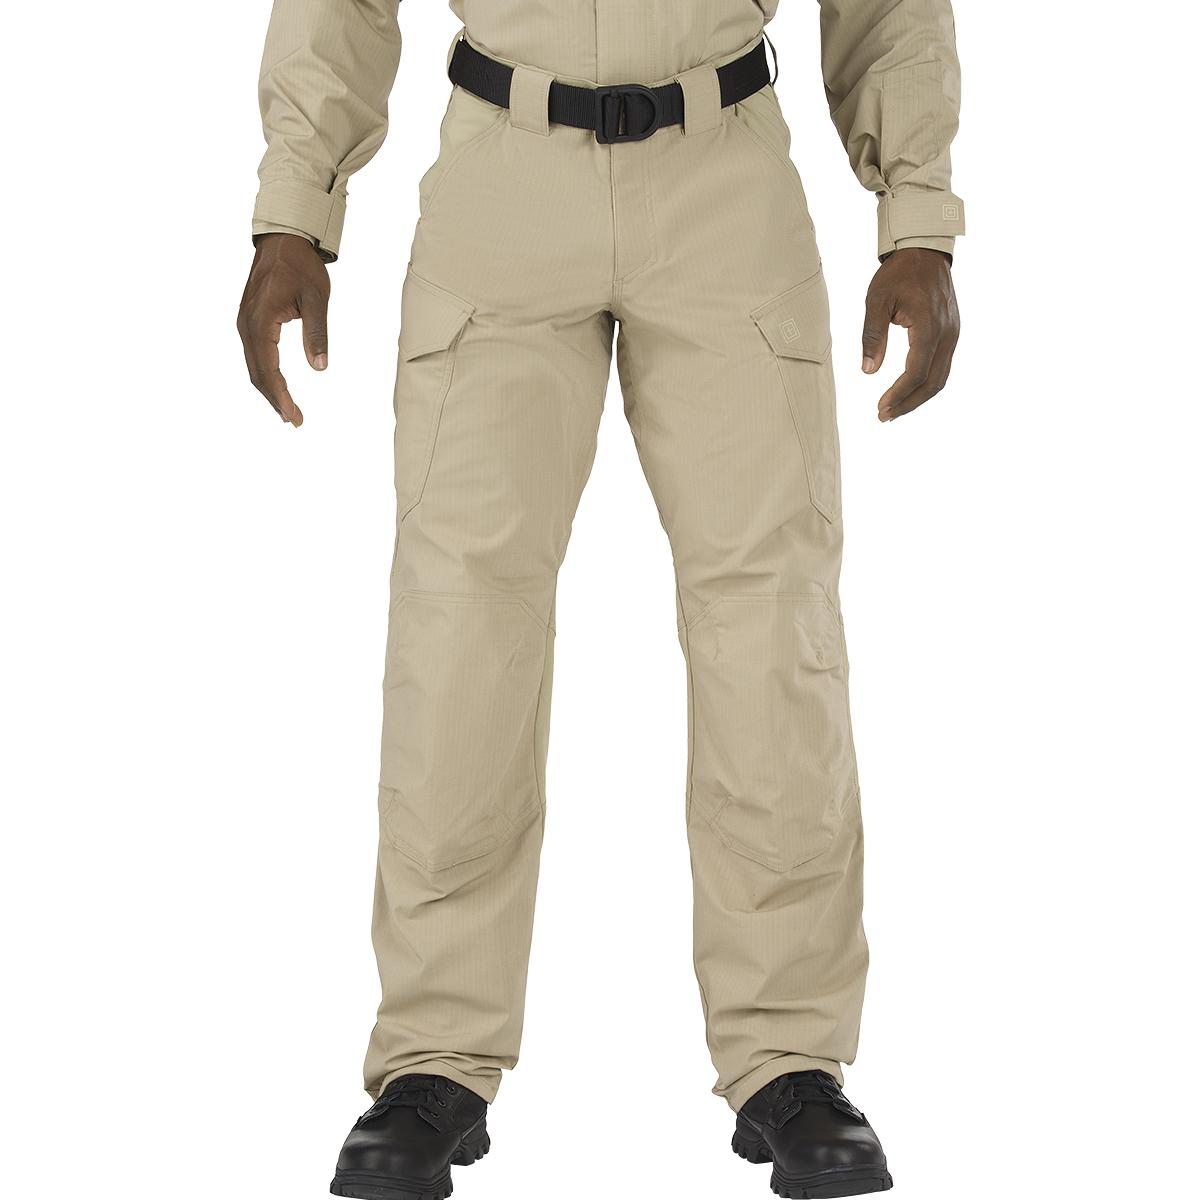 Tactical Uniform for Military, Law Enforcement | Buy 5.11 STRYKE TDU ...